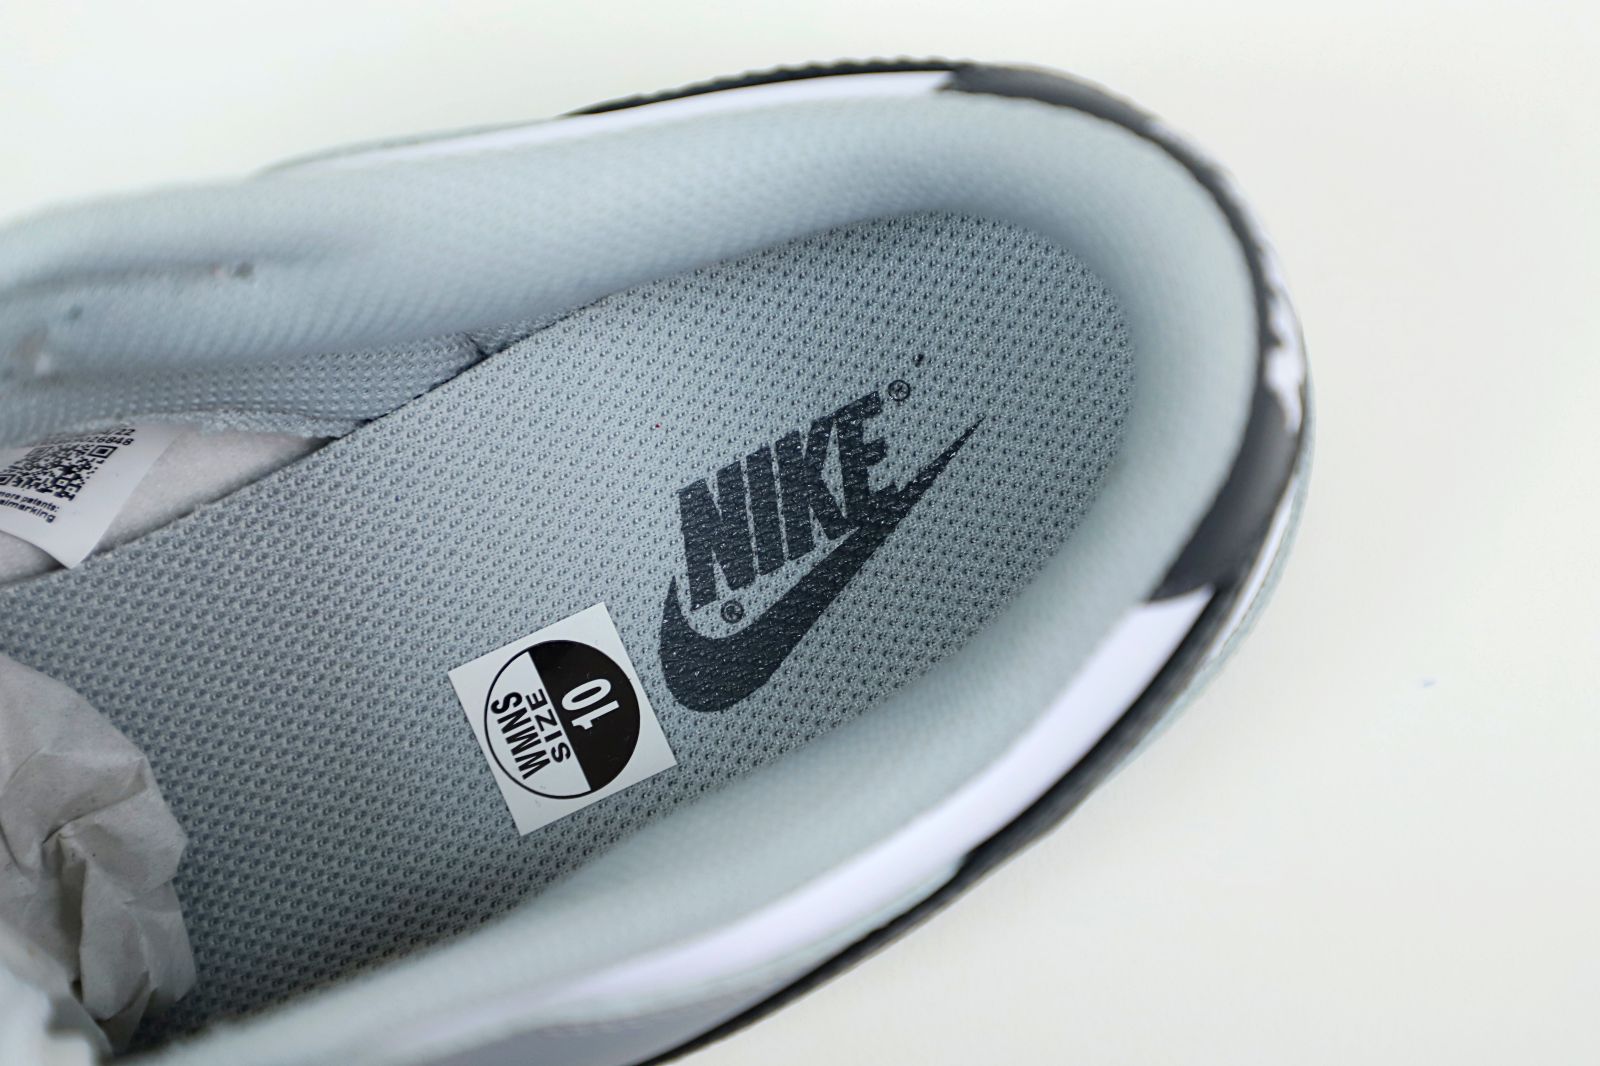 Nike Dunk Low Light Smoke Grey